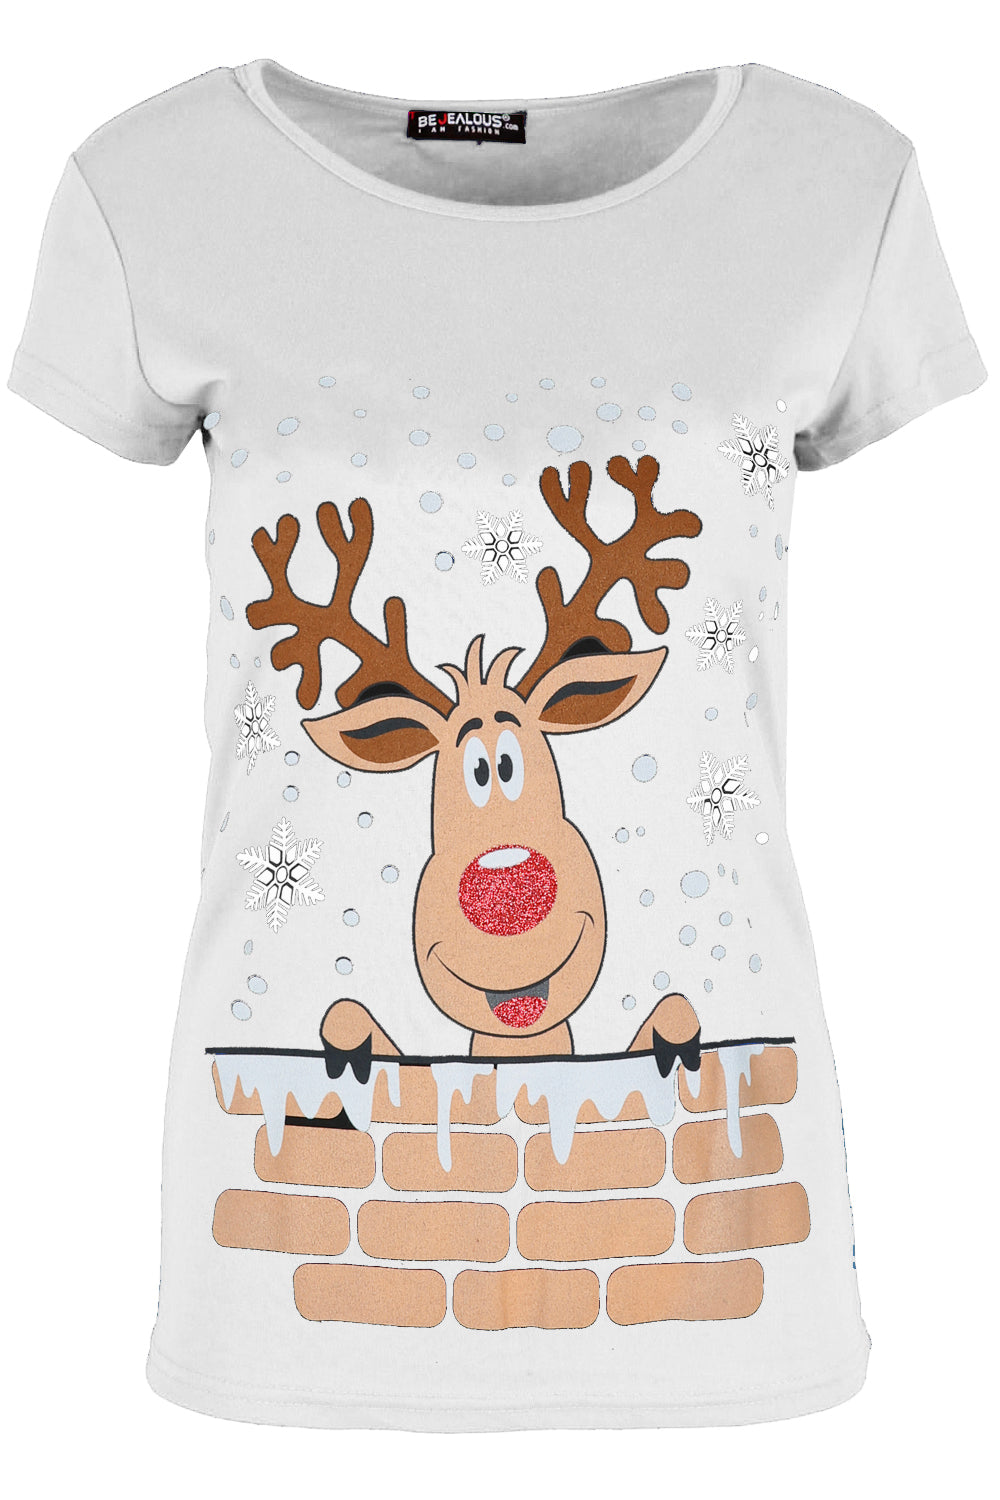 Rudolph Print Short Sleeve Christmas Tshirt - bejealous-com